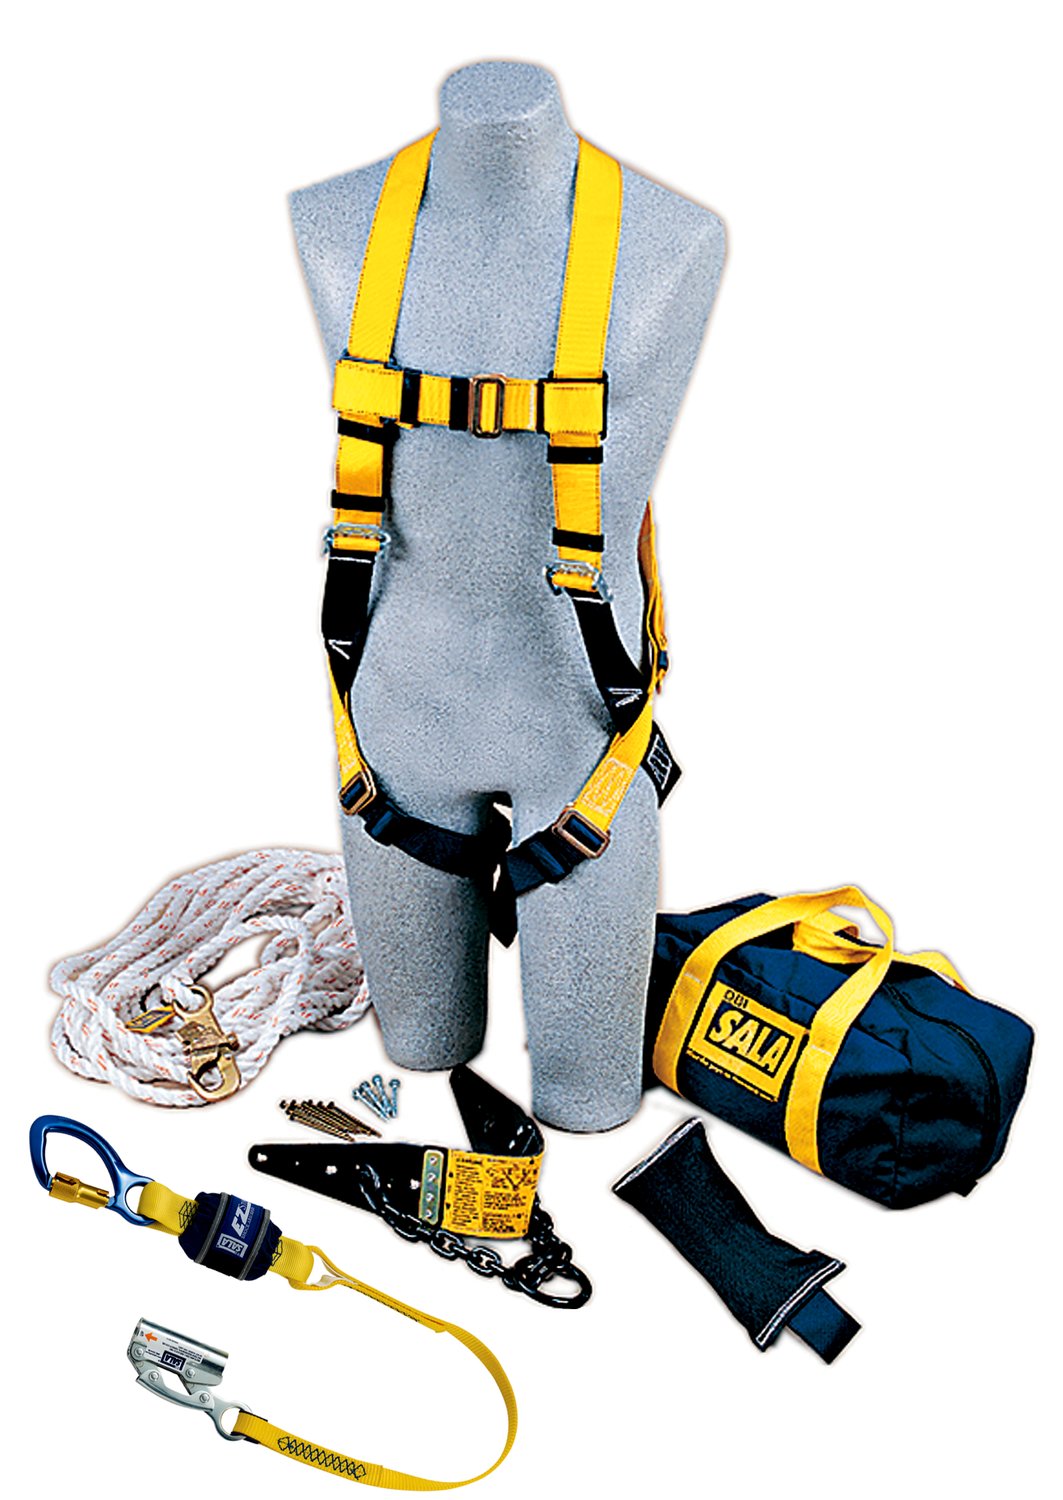 7100228429 - 3M DBI-SALA Roofer's Fall Protection Kit 2104168